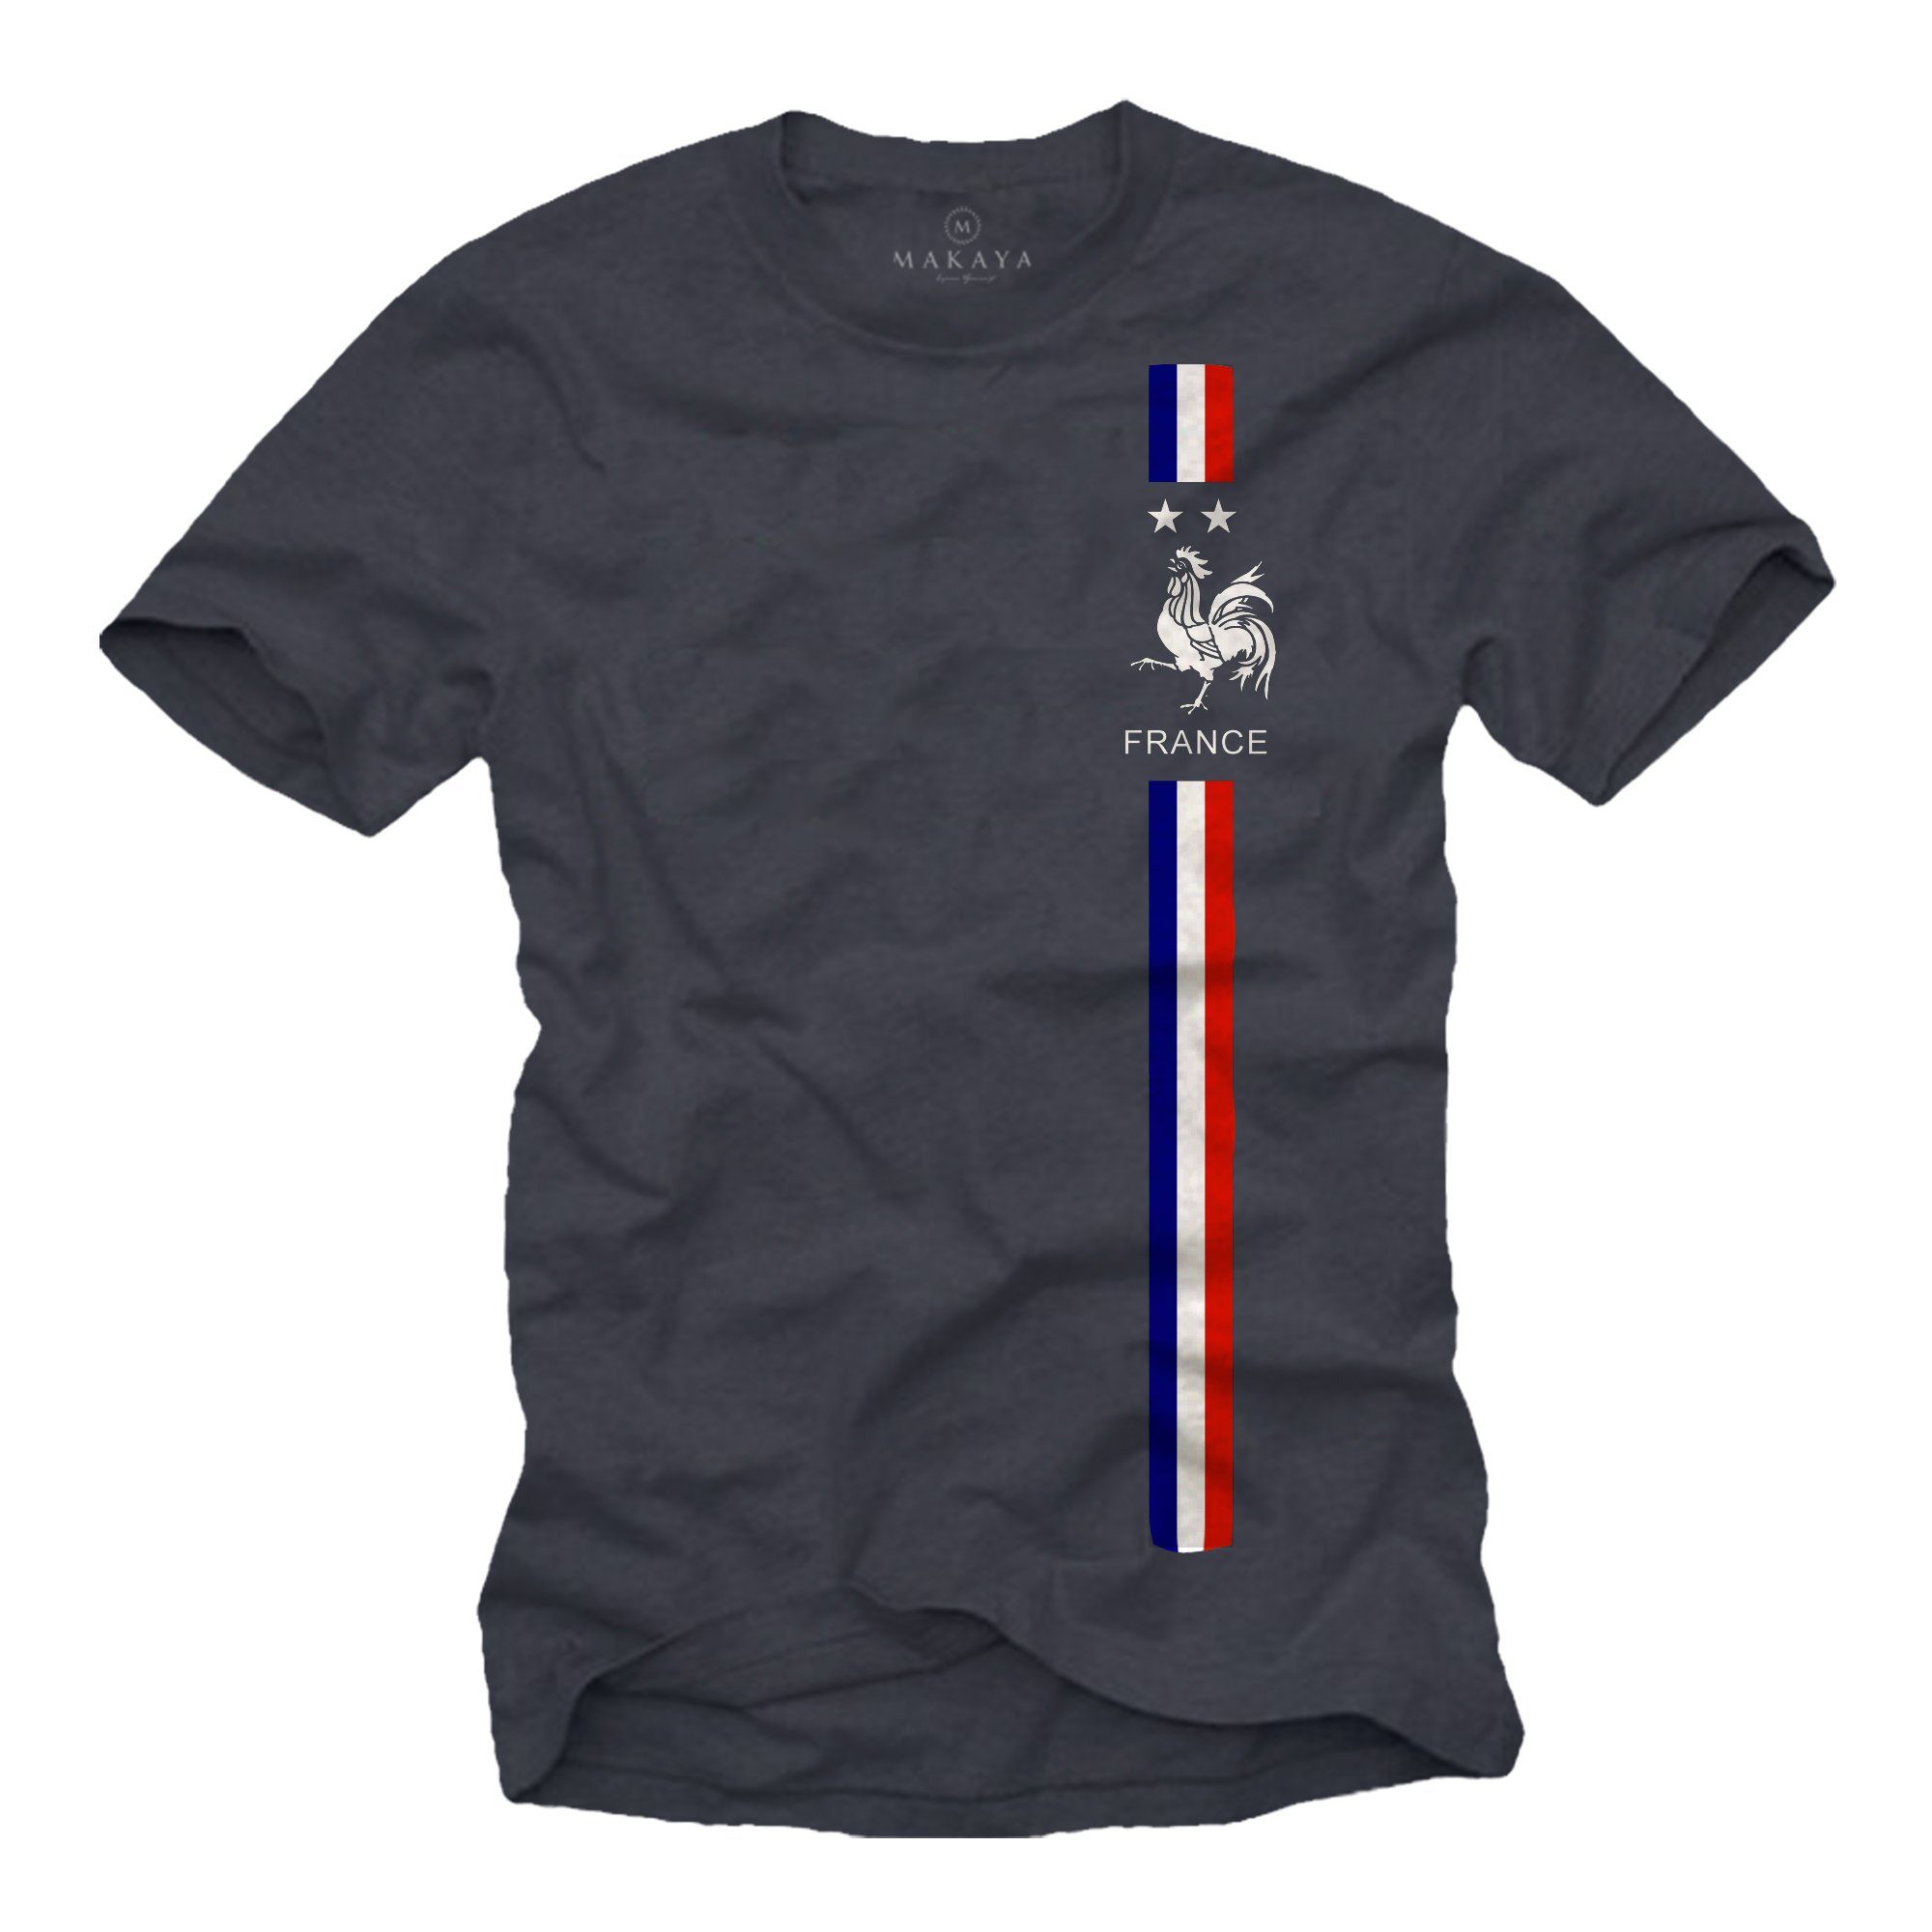 MAKAYA Print-Shirt Herren Fußball Trikot Frankreich Fahne Flagge Männer Geschenke Blaugrau